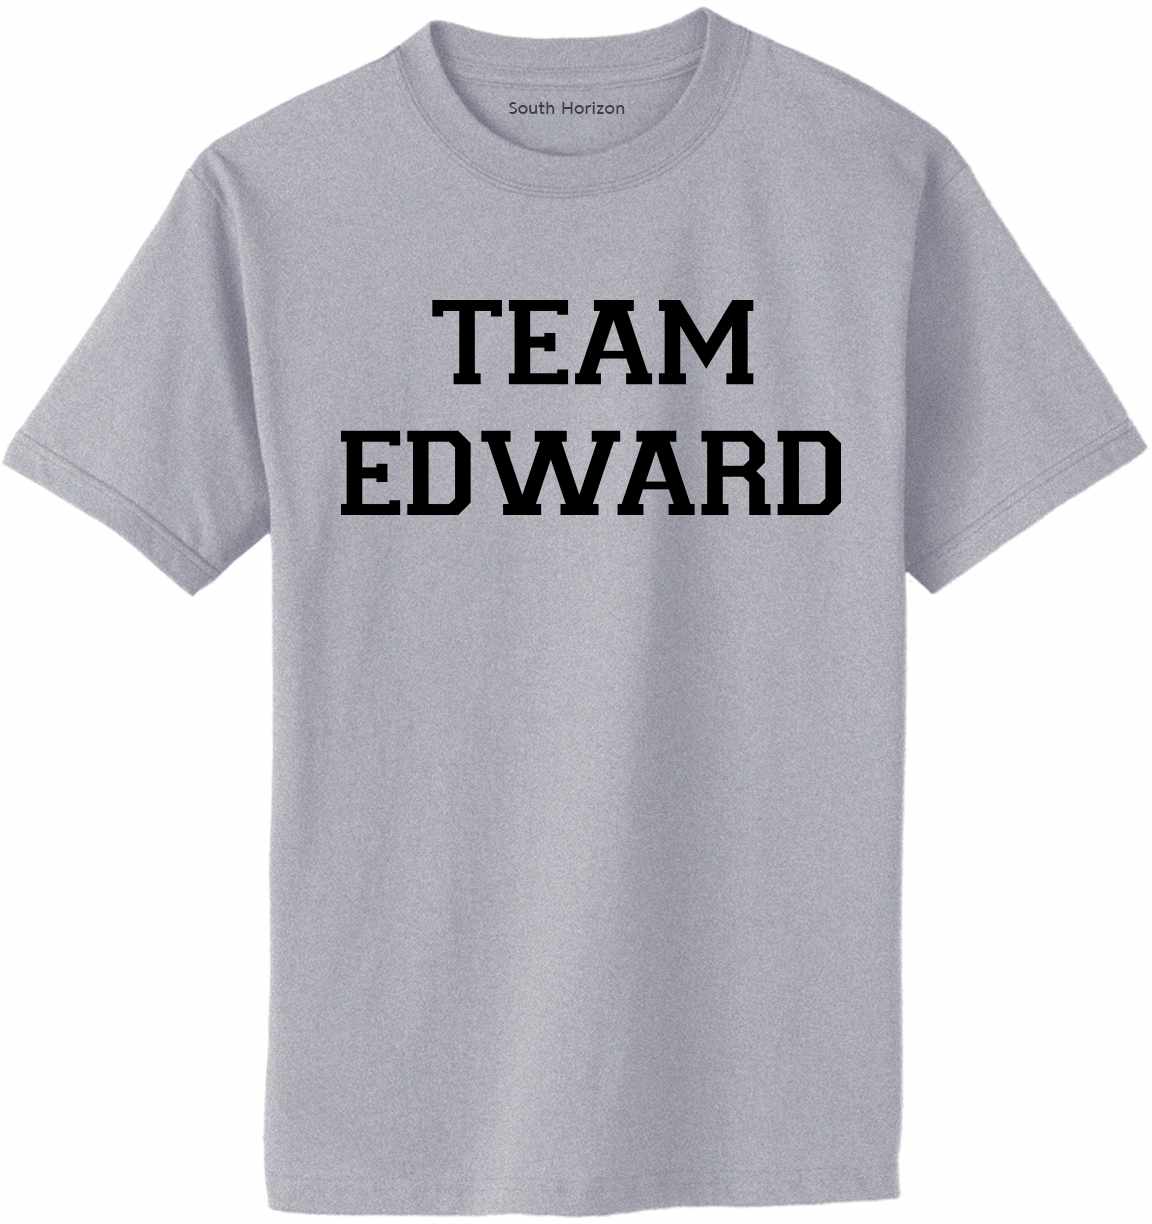 TEAM EDWARD Adult T-Shirt (#314-1)